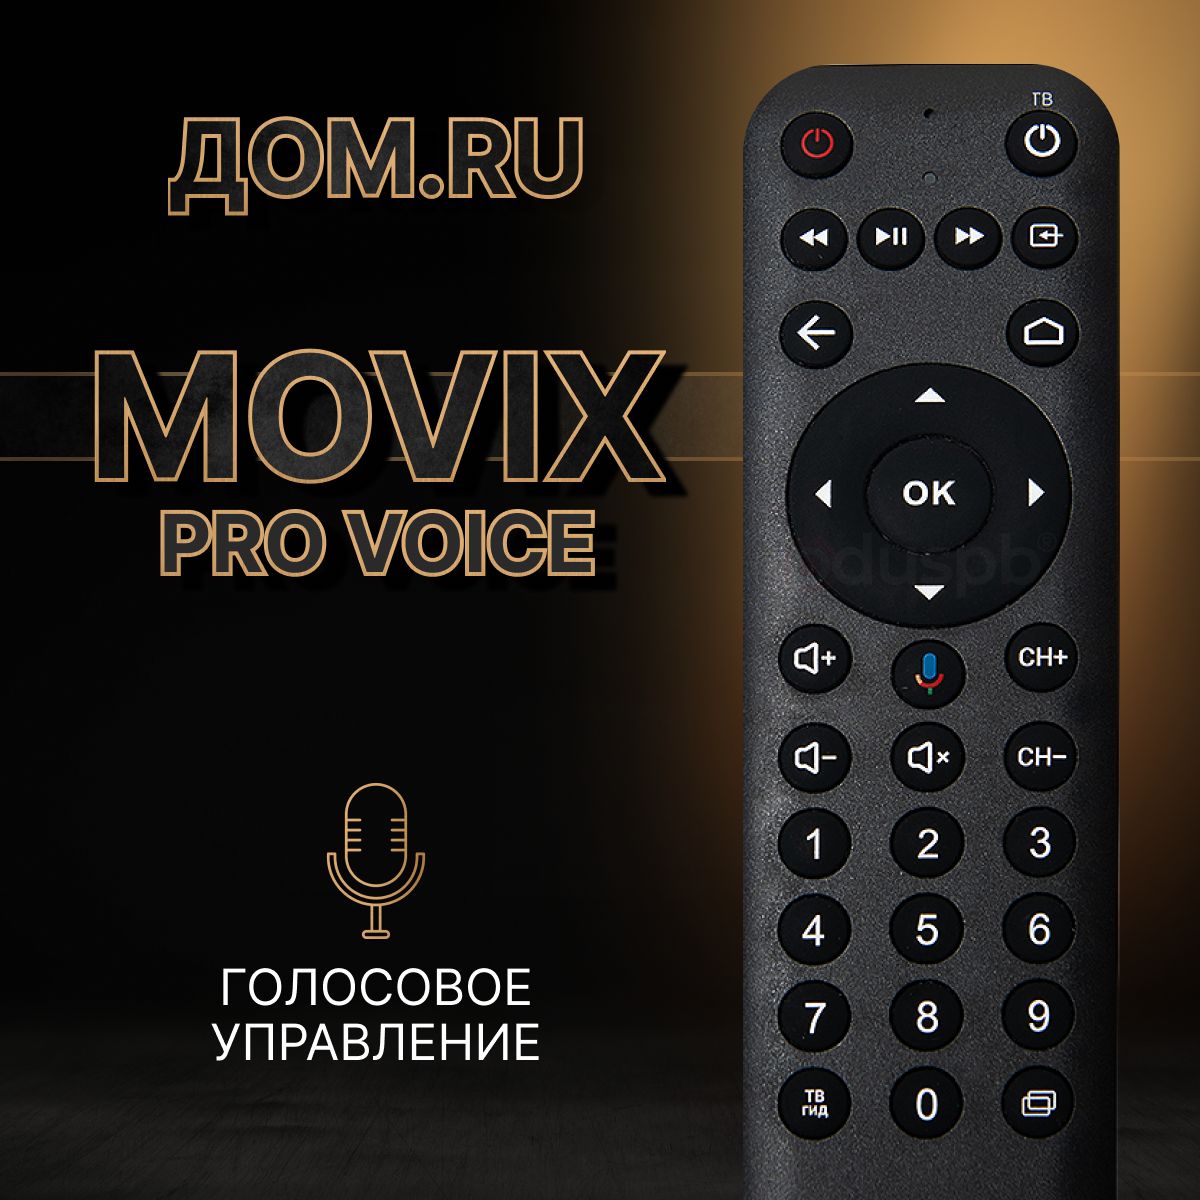 Пульт Movix. Пульт для приставки Мовикс. ТВ-приставка Movix Pro Voice. Мовикс приставка батарейка в пульте. Пульт movix купить